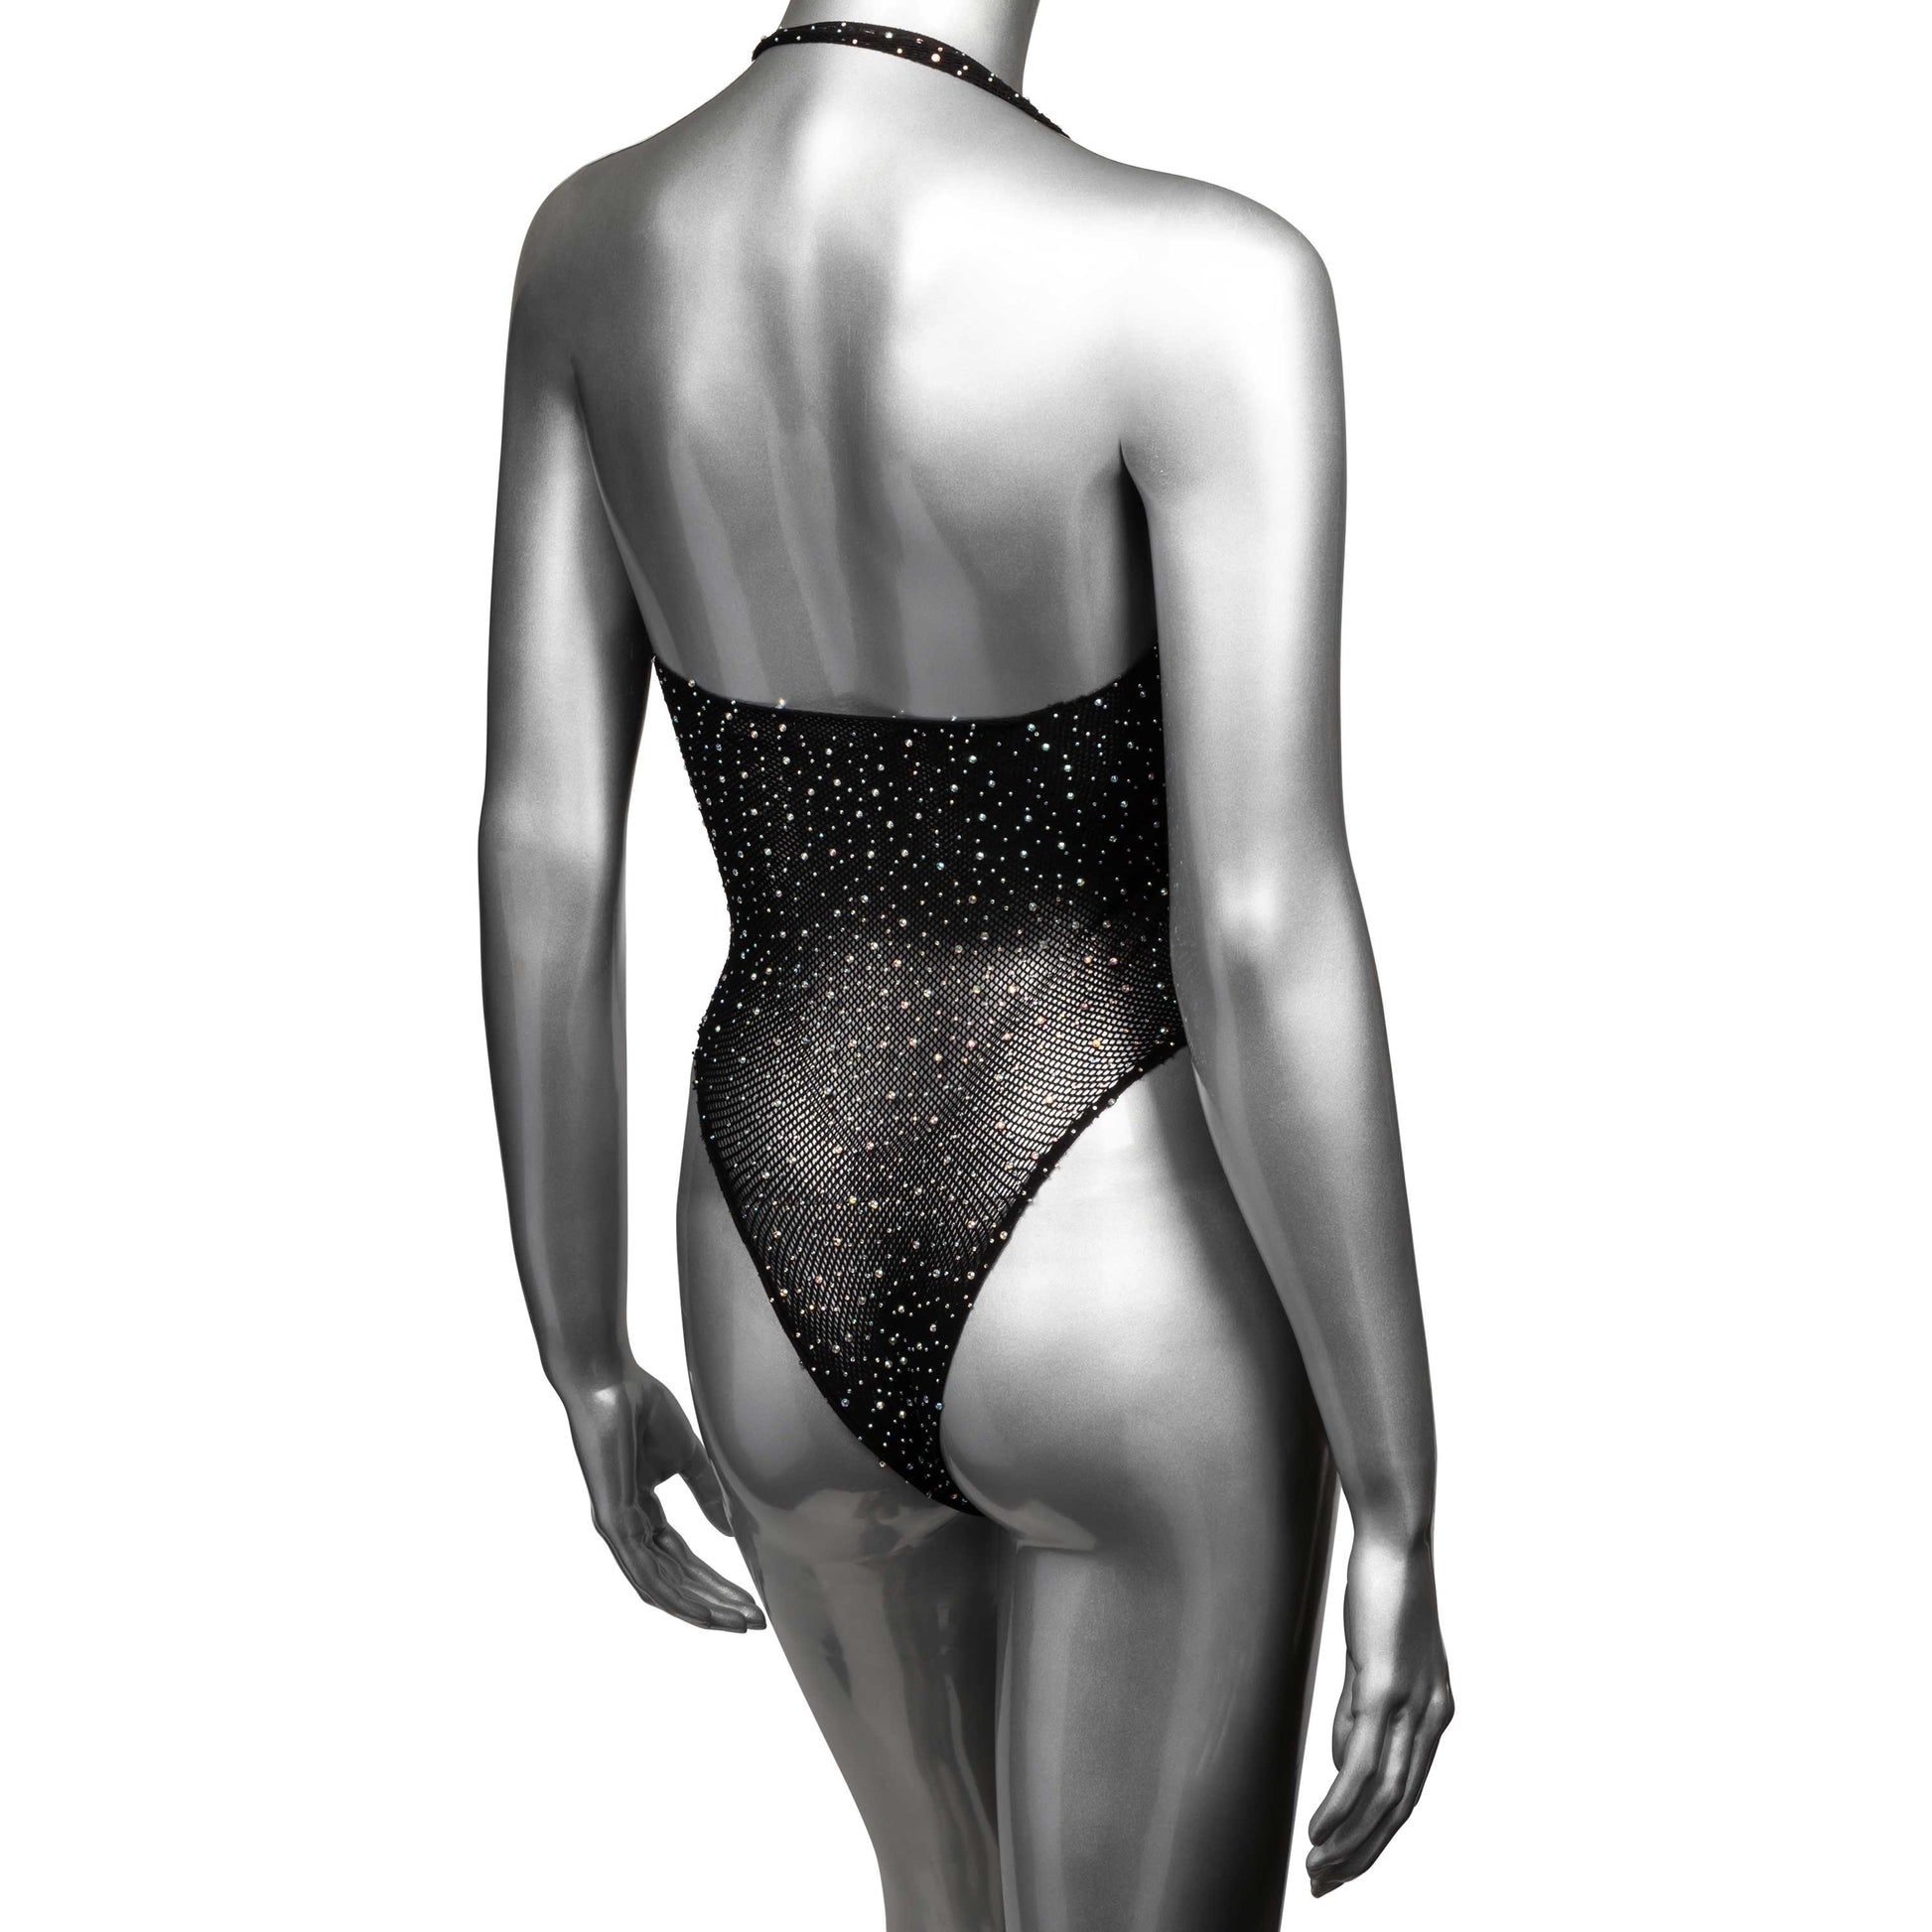 Radiance Deep v Body Suit - One Size - Black SE3002053